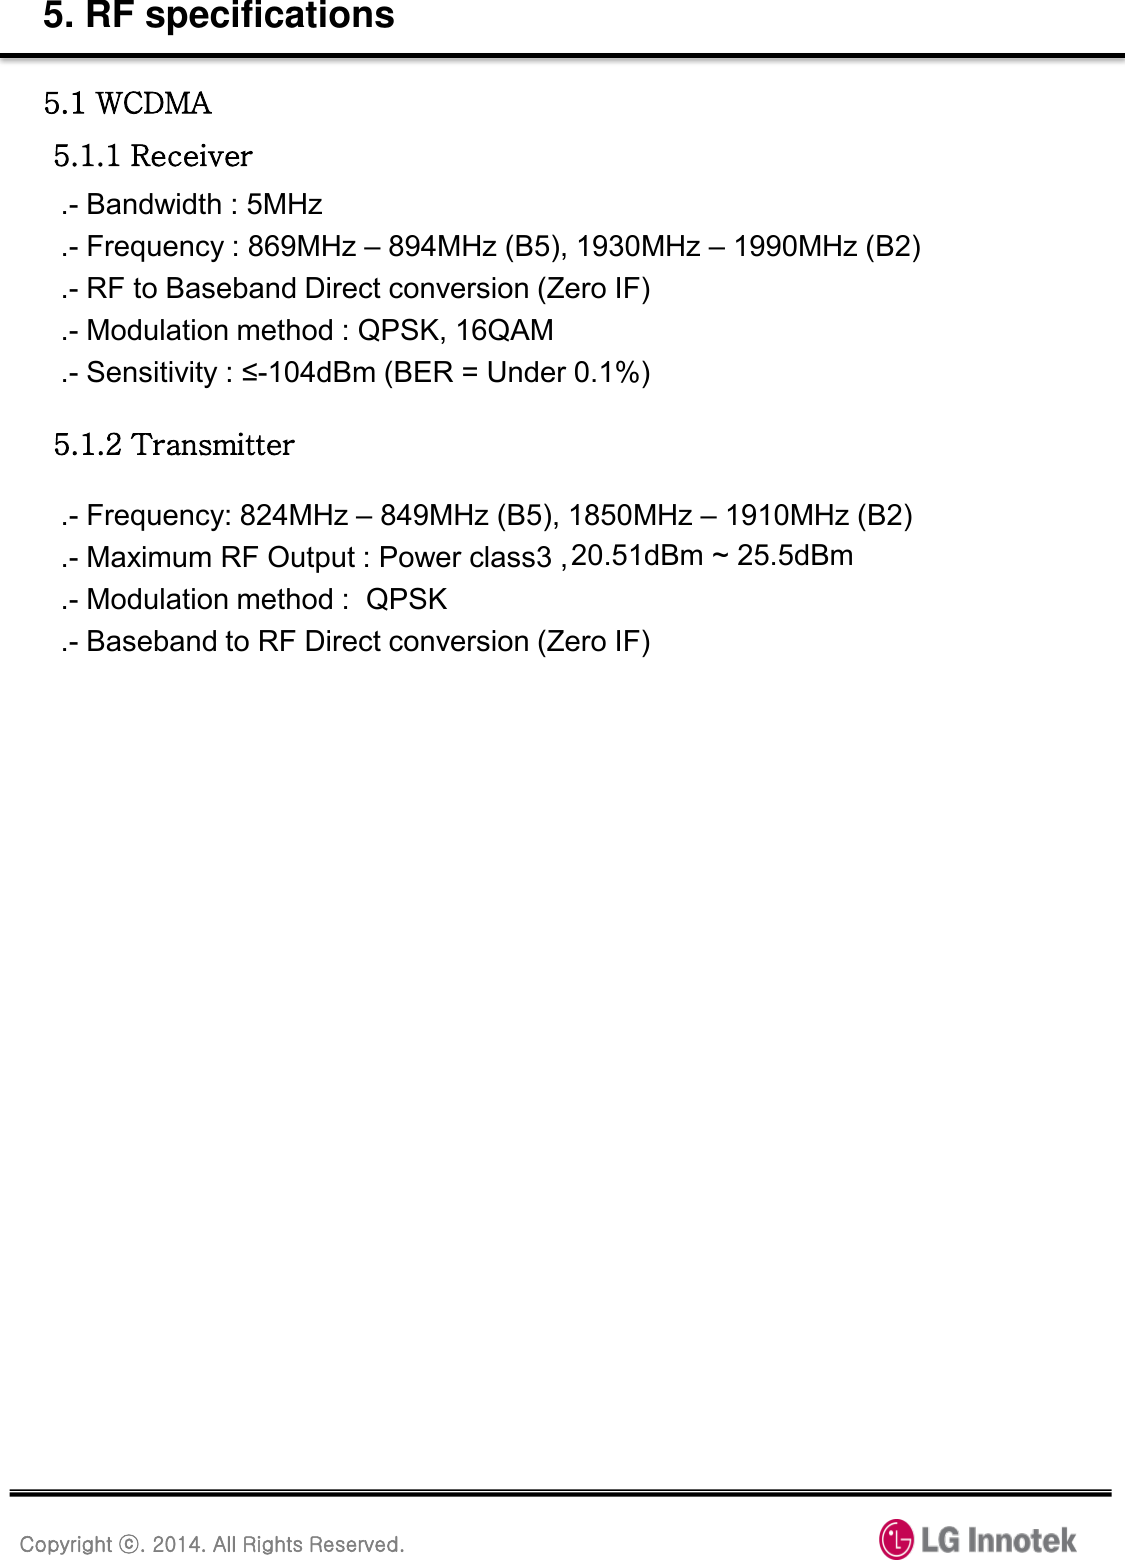 Copyright ⓒ. 2014. All Rights Reserved. 5. RF specifications 5.1 WCDMA  5.1.1 Receiver .- Bandwidth : 5MHz .- Frequency : 869MHz – 894MHz (B5), 1930MHz – 1990MHz (B2) .- RF to Baseband Direct conversion (Zero IF) .- Modulation method : QPSK, 16QAM .- Sensitivity : ≤-104dBm (BER = Under 0.1%) 5.1.2 Transmitter .- Frequency: 824MHz – 849MHz (B5), 1850MHz – 1910MHz (B2) .- Maximum RF Output : Power class3 , 20.3dBm ~ 25.7dBm                                    .- Modulation method :  QPSK .- Baseband to RF Direct conversion (Zero IF) 20.51dBm ~ 25.5dBm 